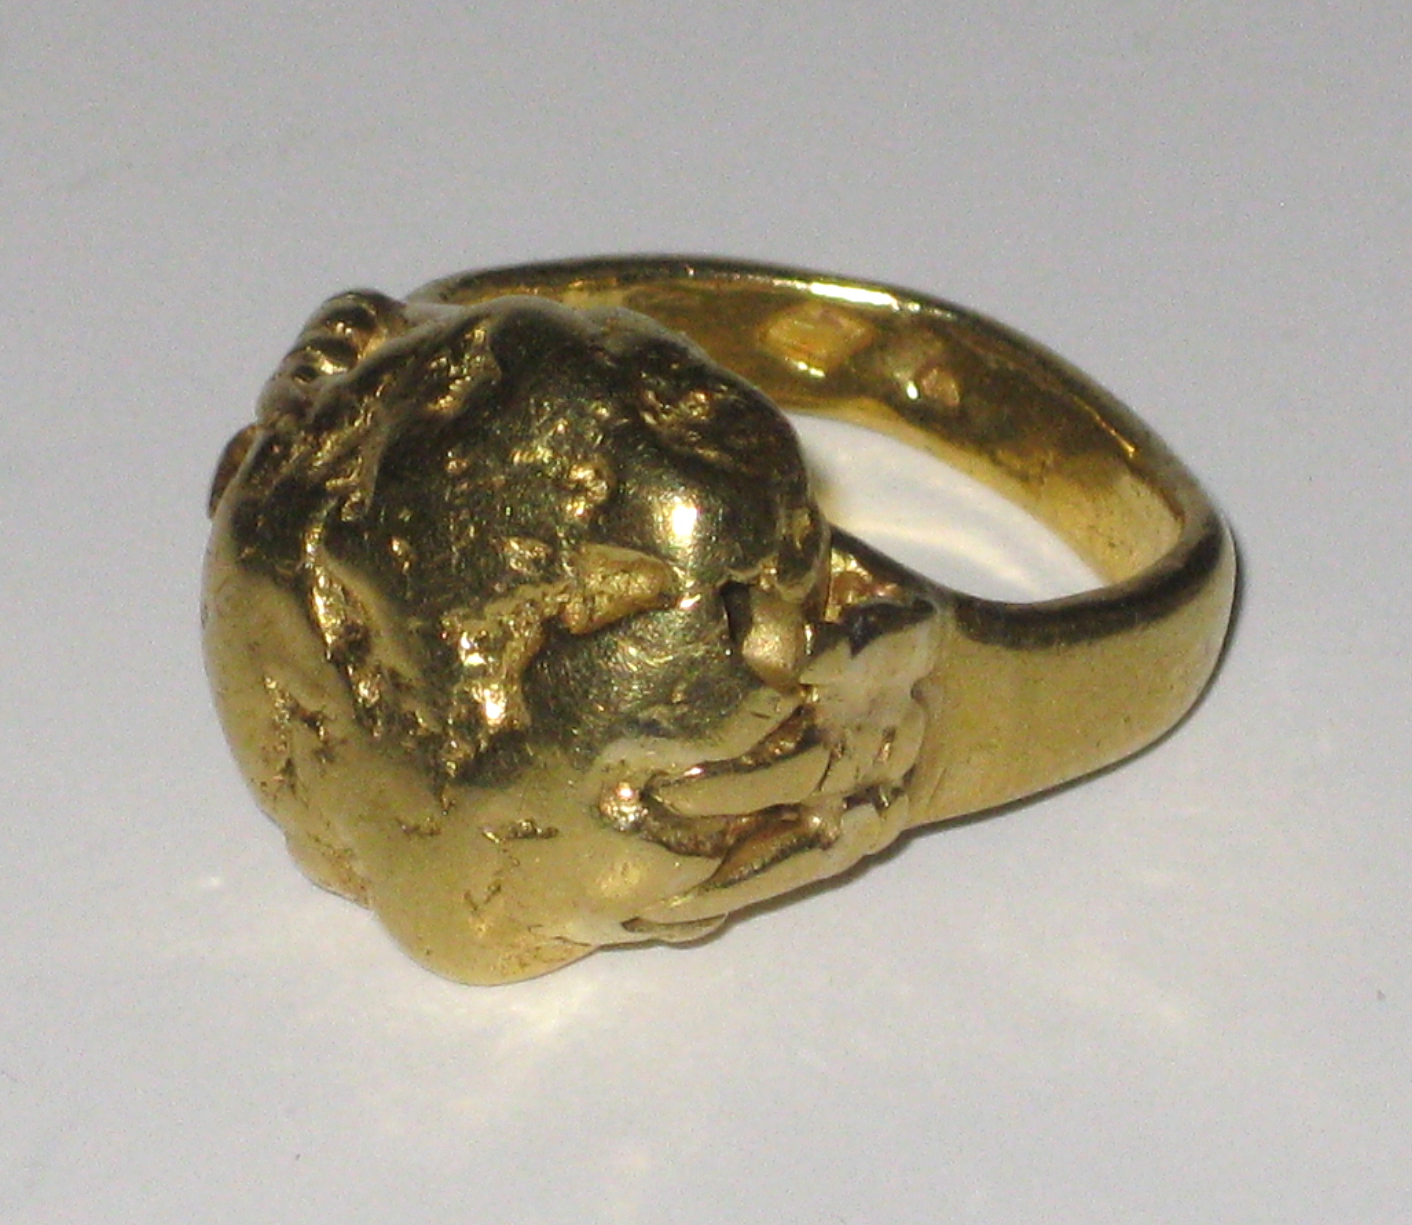 Pierre Hugo “Gold nugget” ring, 18K gold, signed, c. 1970